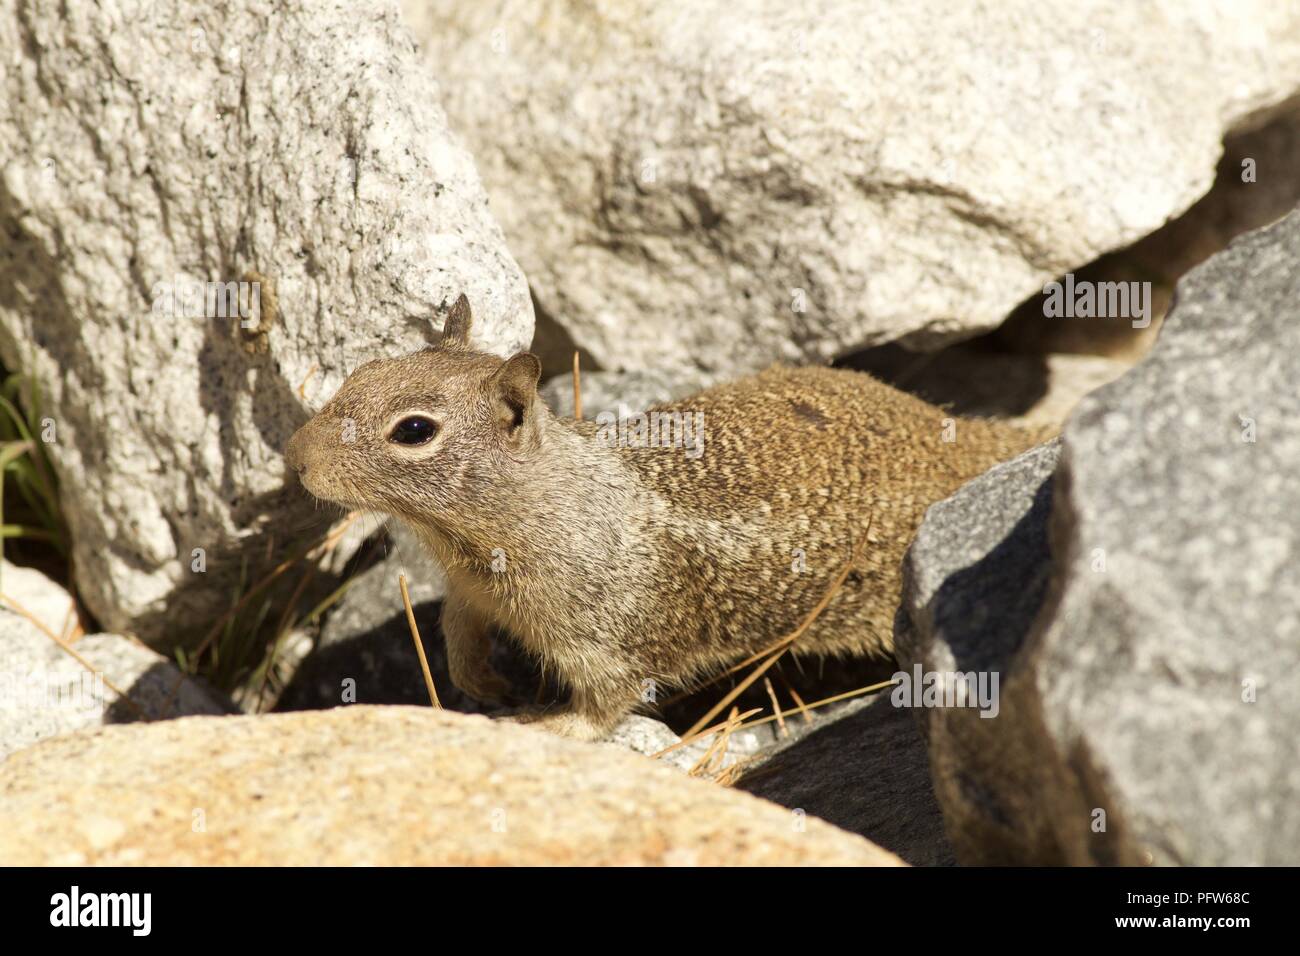 California Ground Squirrel (Spermophilus beecheyi) among rocks, Yosemite National Park, California Stock Photo